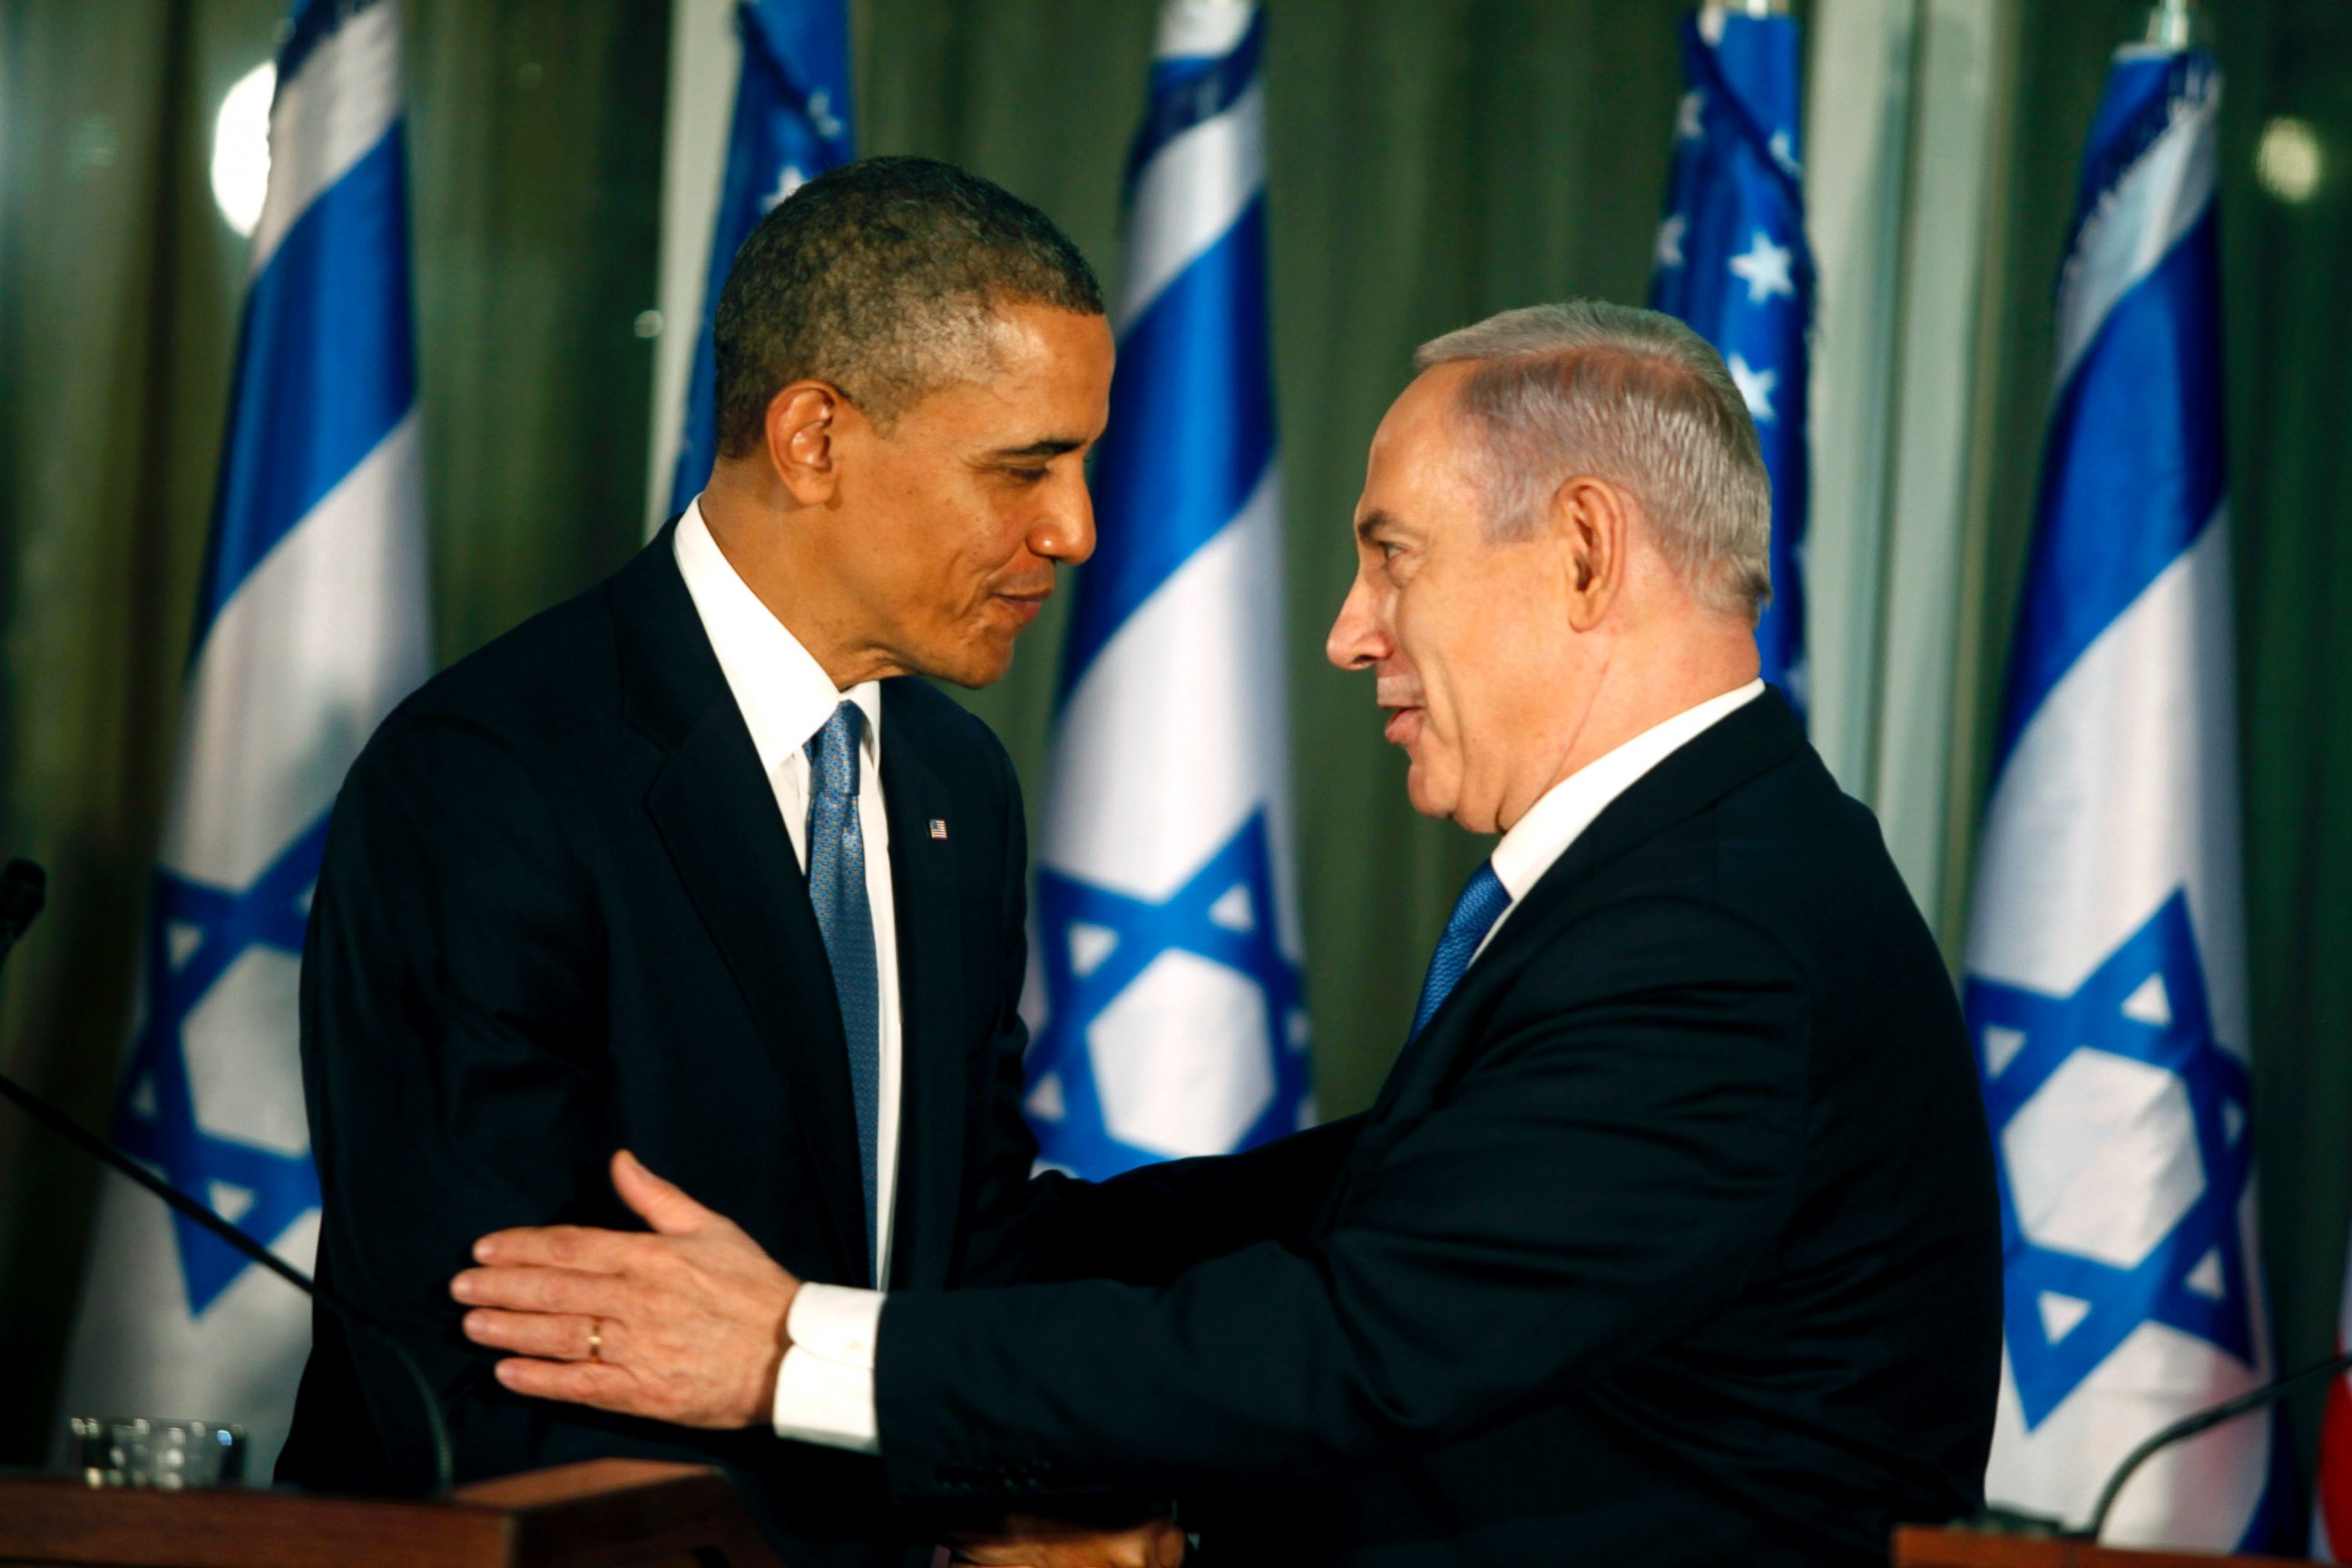 PHOTO: U.S. President Barack Obama (L) greets Israeli Prime Minister Benjamin Netanyahu during a press conference, March 20, 2013, in Jerusalem.